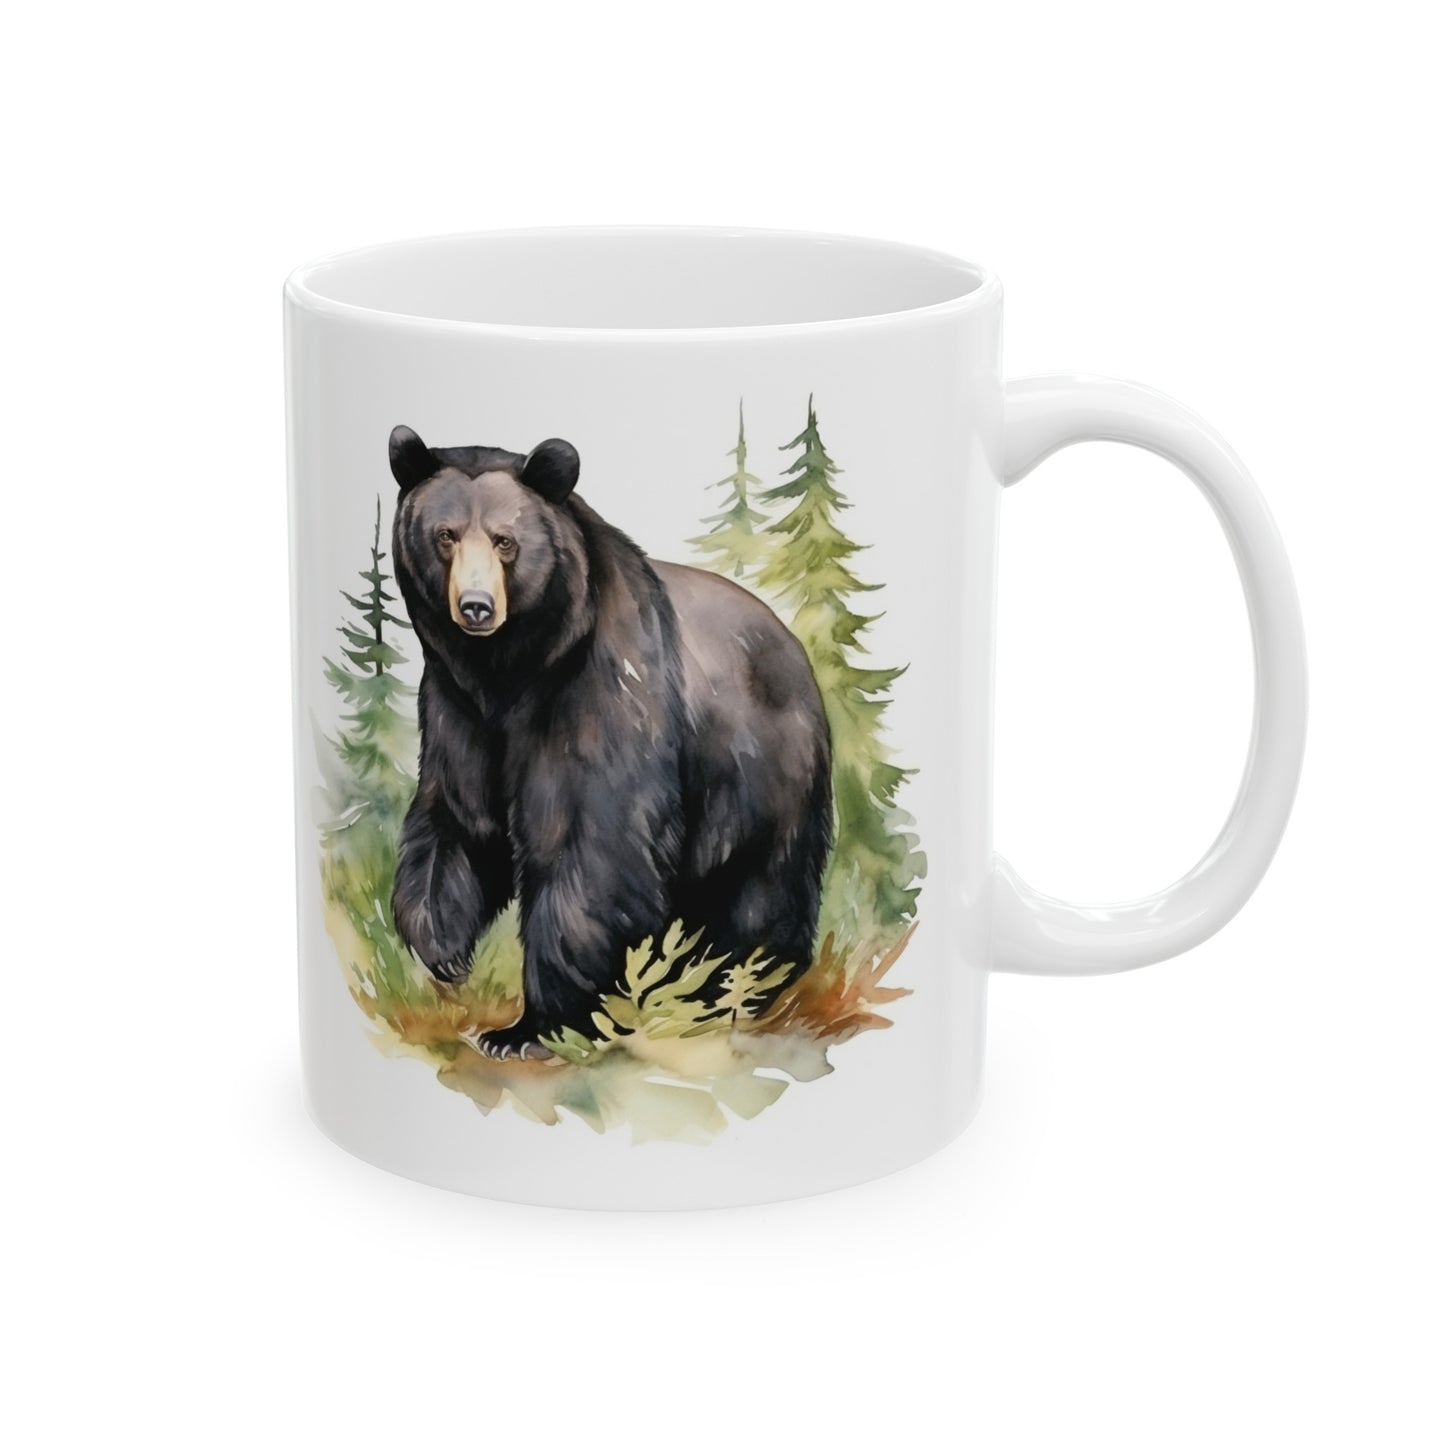 Black Bear in the Woods Watercolor Style Mug